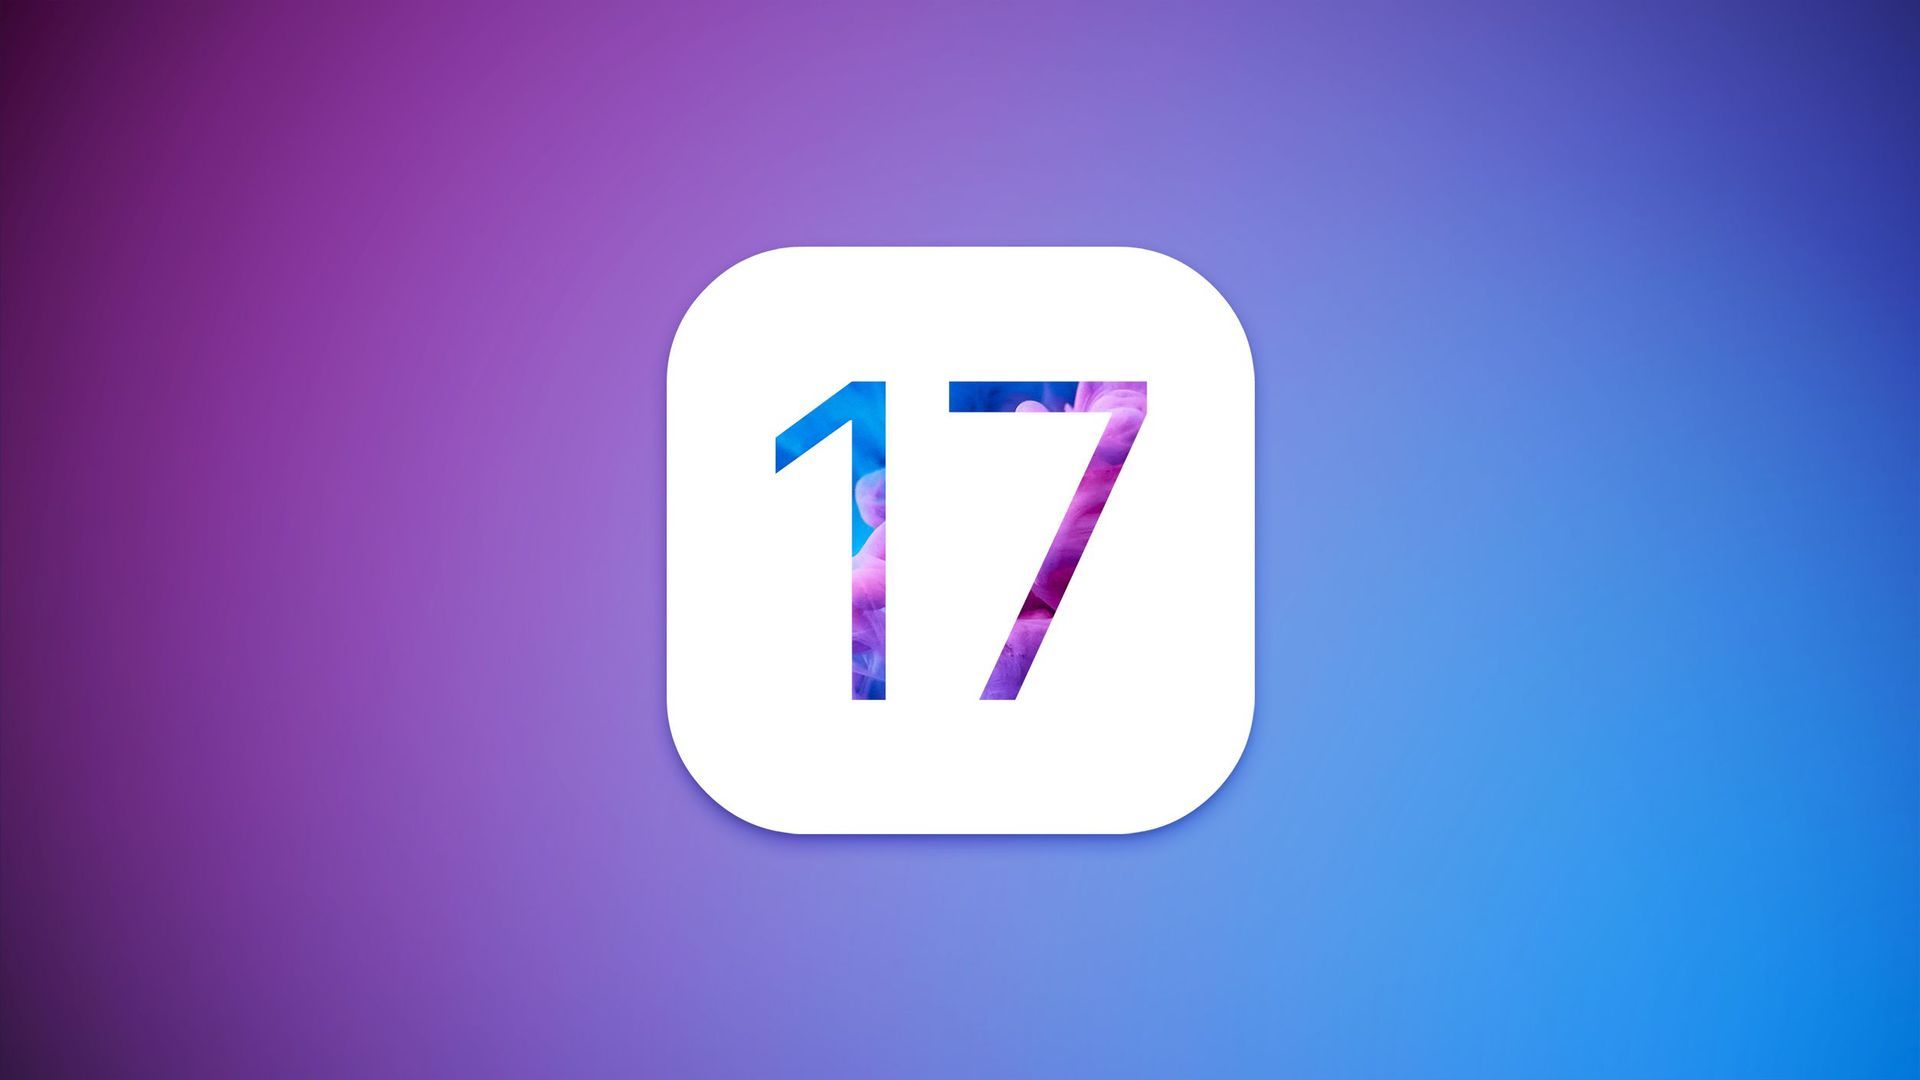 How to get iOS 17 beta?